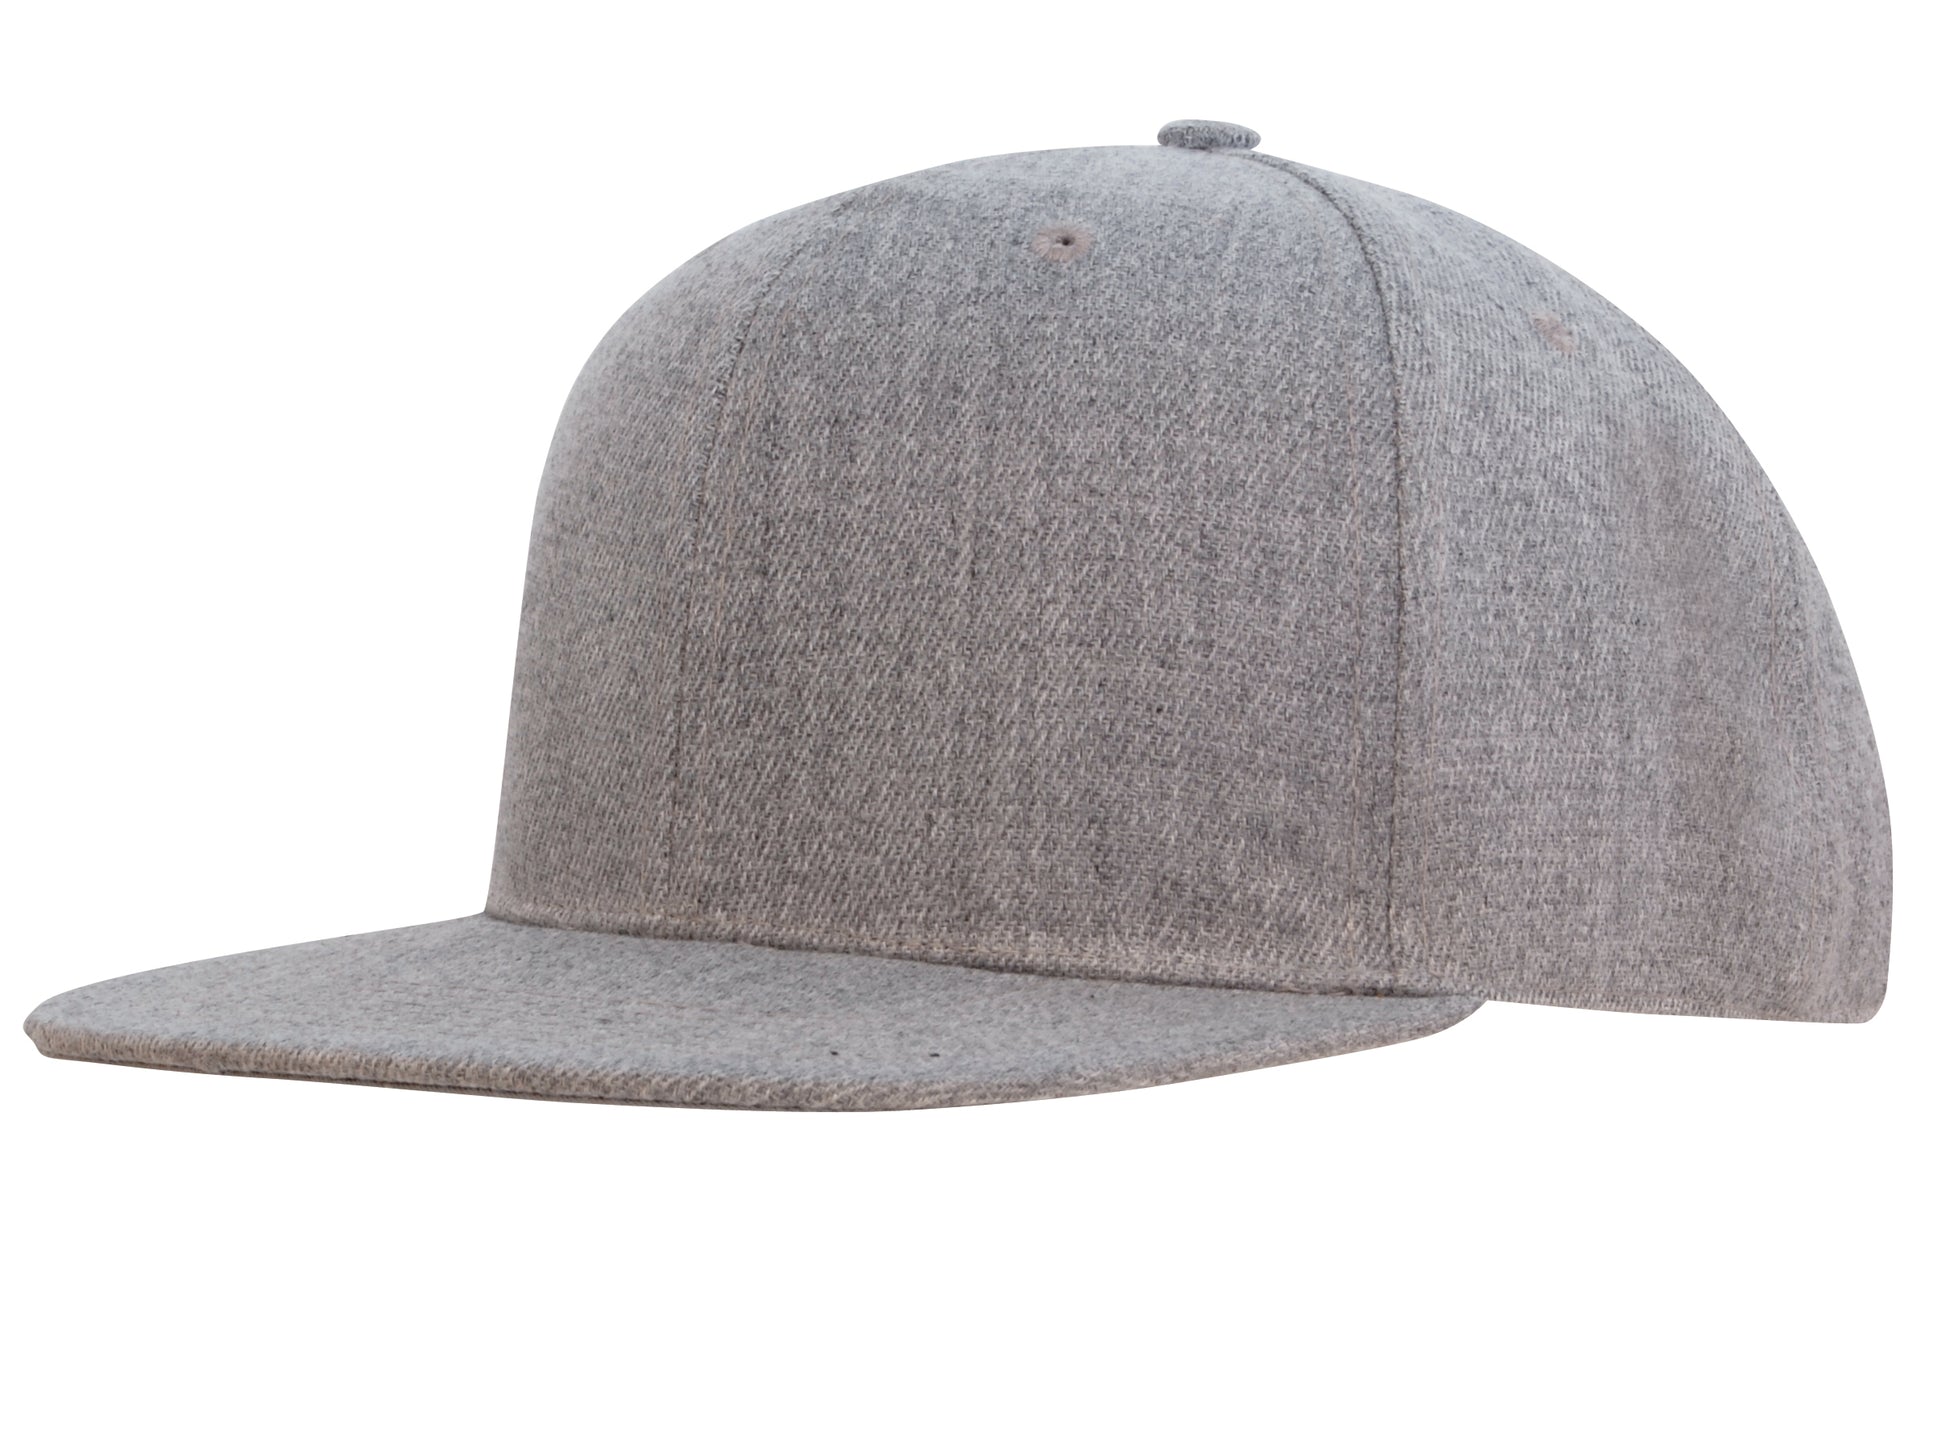 Headwear Premium American Twill Flat Peak Cap (4158)